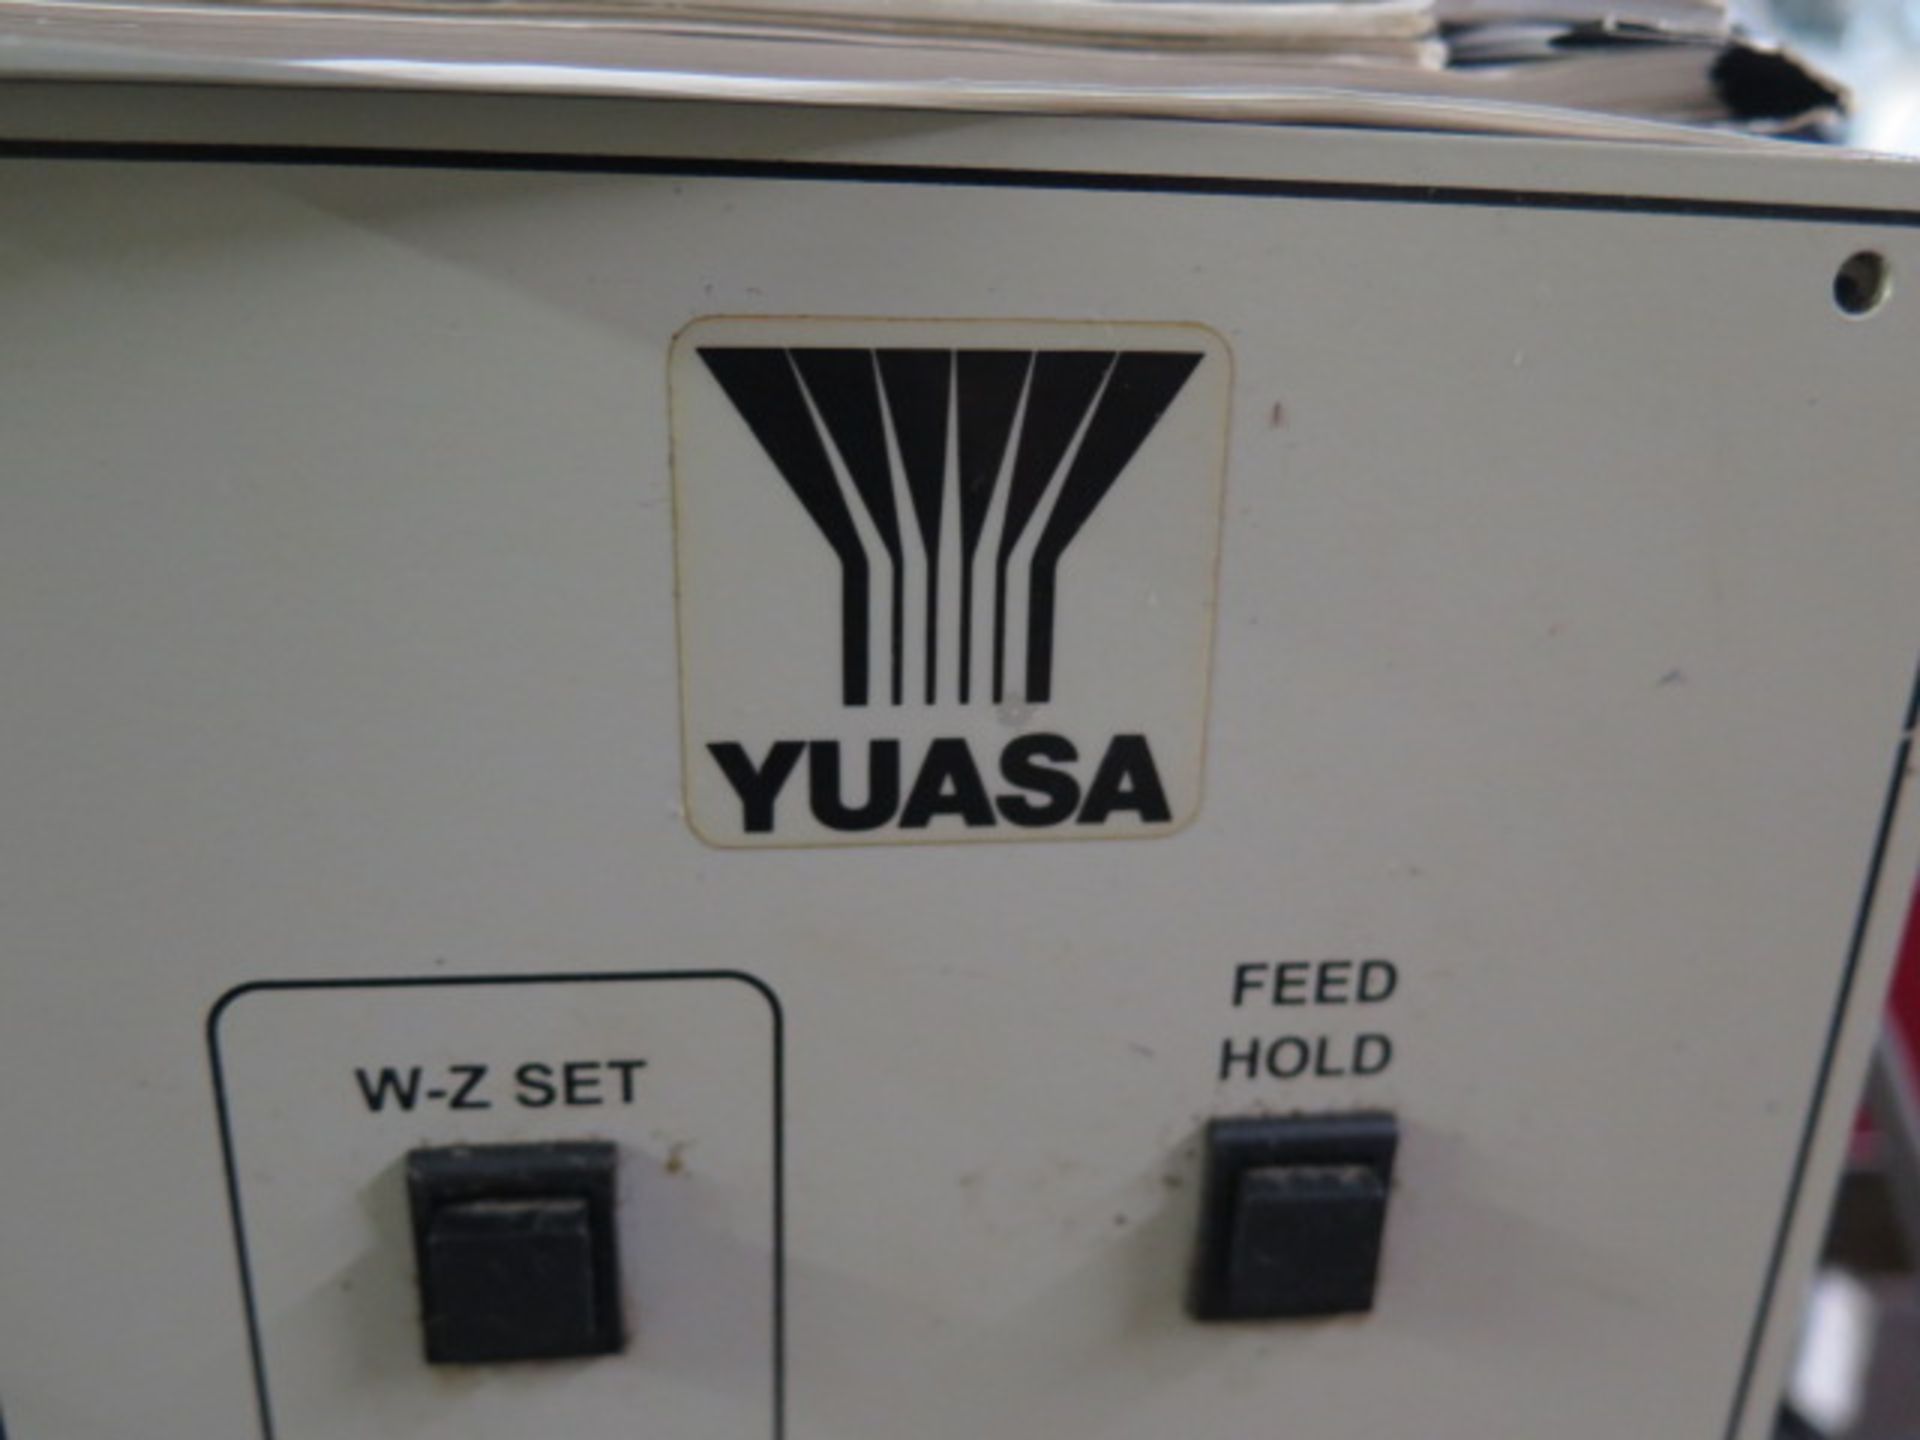 Yuasa 4th Axis 3-Head 5C Rotary Indexer w/ Yuasa Servo Controller (SOLD AS-IS - NO WARRANTY) - Image 7 of 7